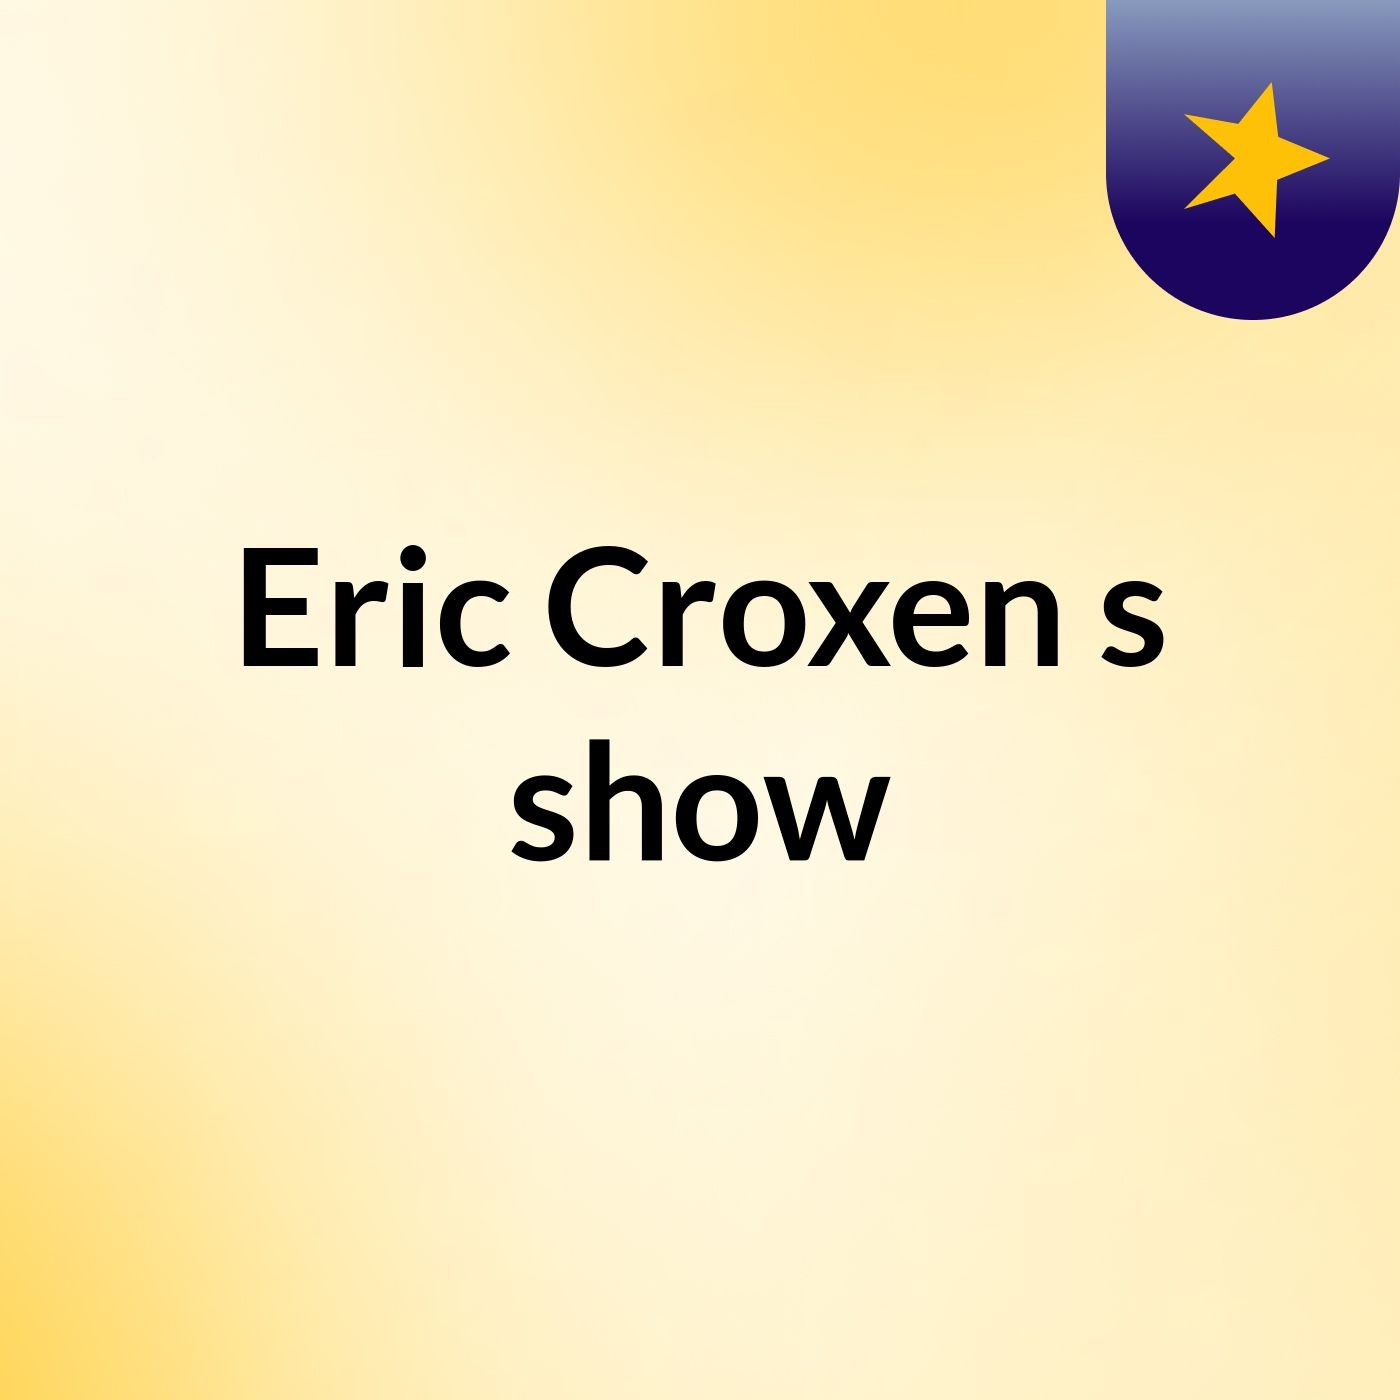 Eric Croxen's show